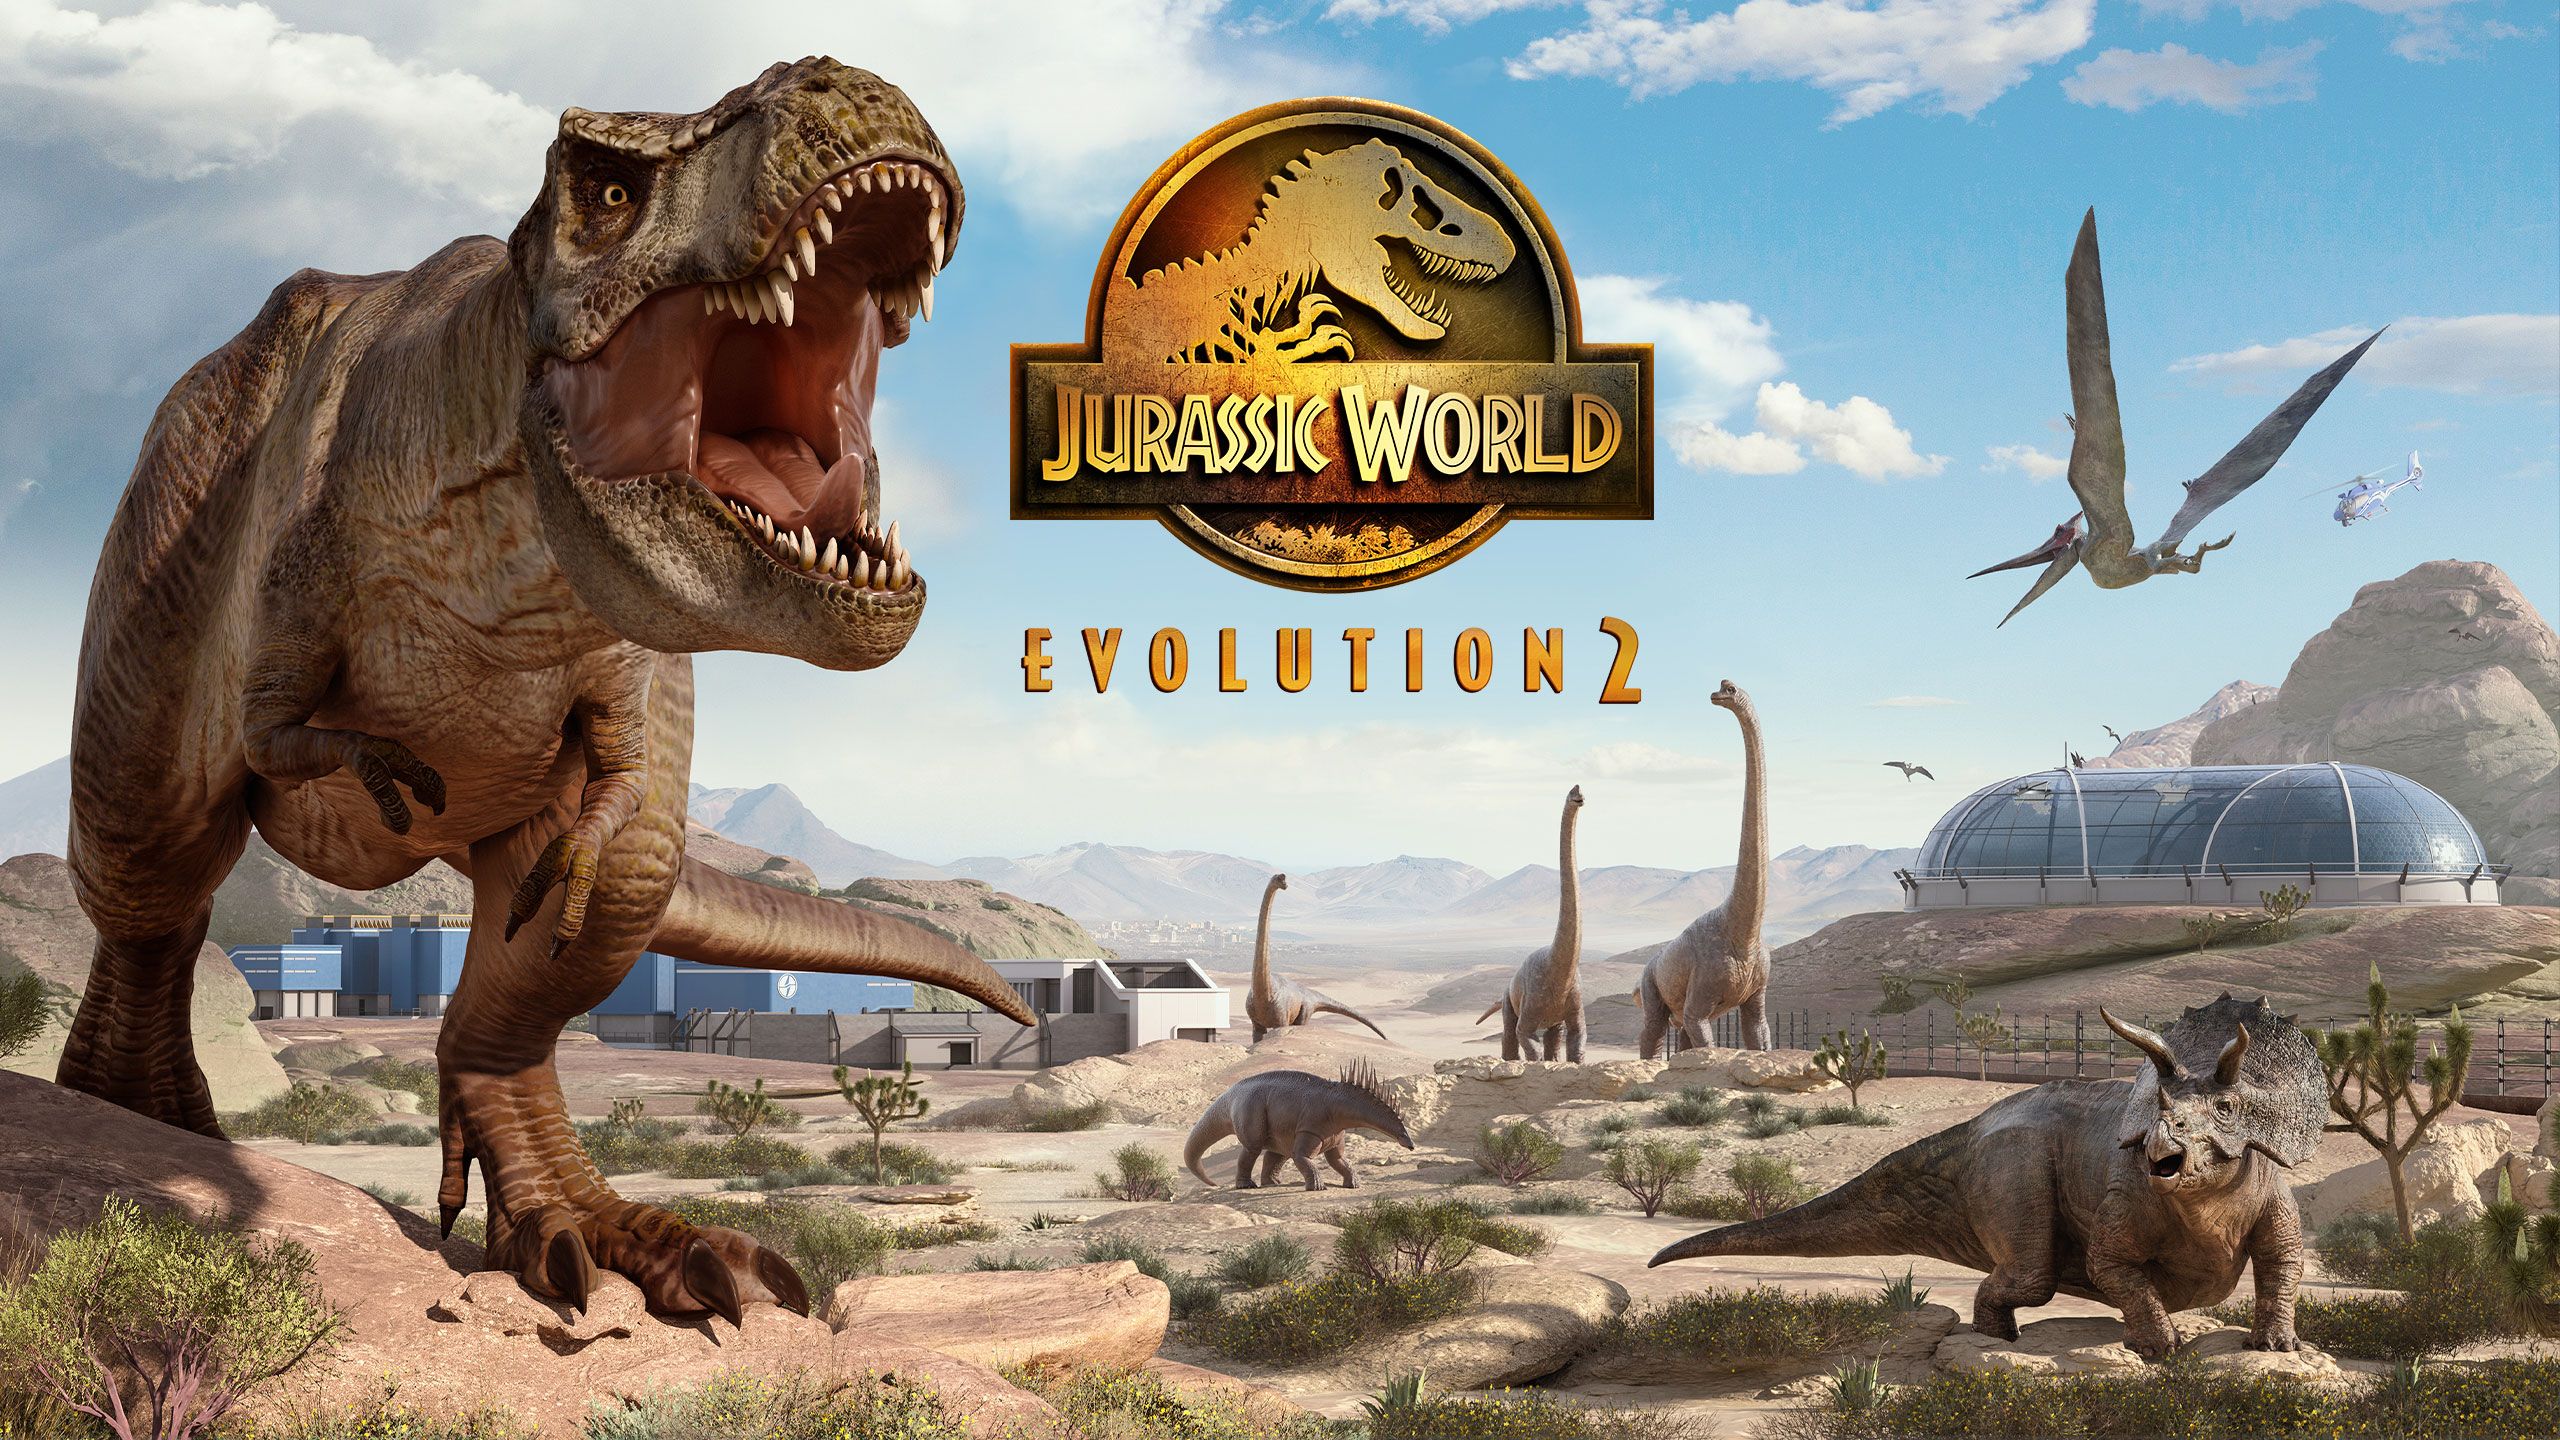 free for mac download Jurassic World: Dominion